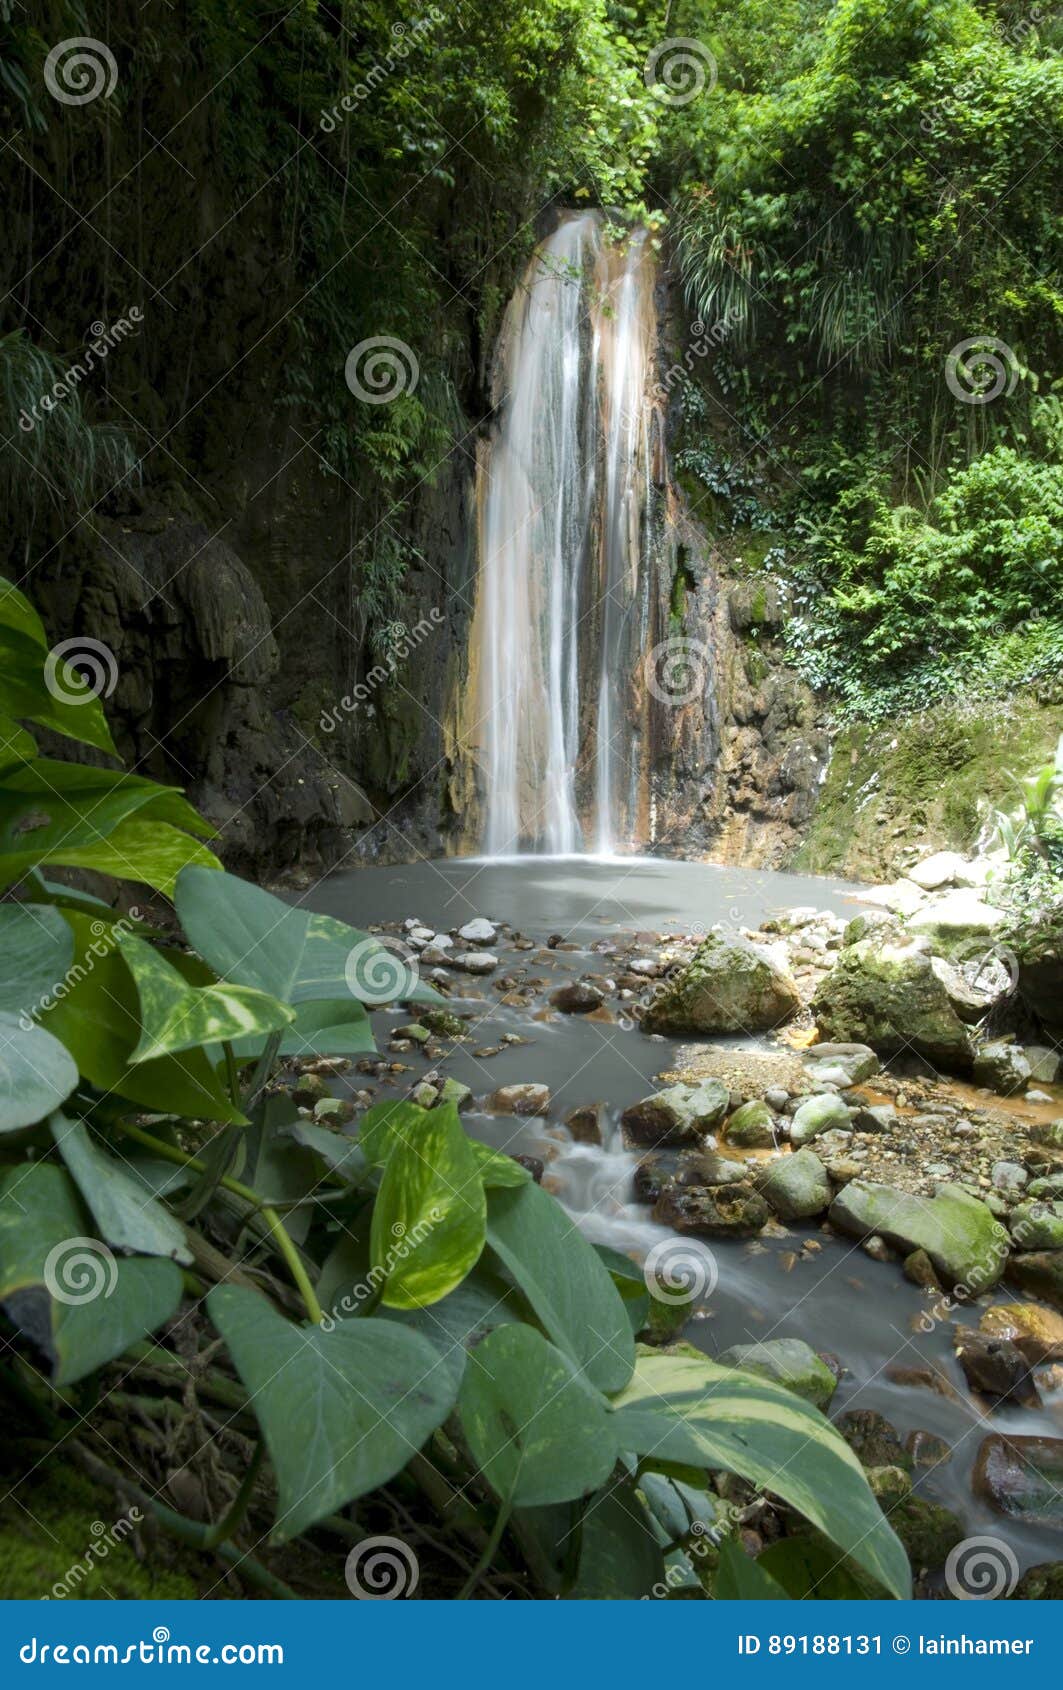 Waterfall St Lucia Botanical Gardens Stock Image Image Of Luxury